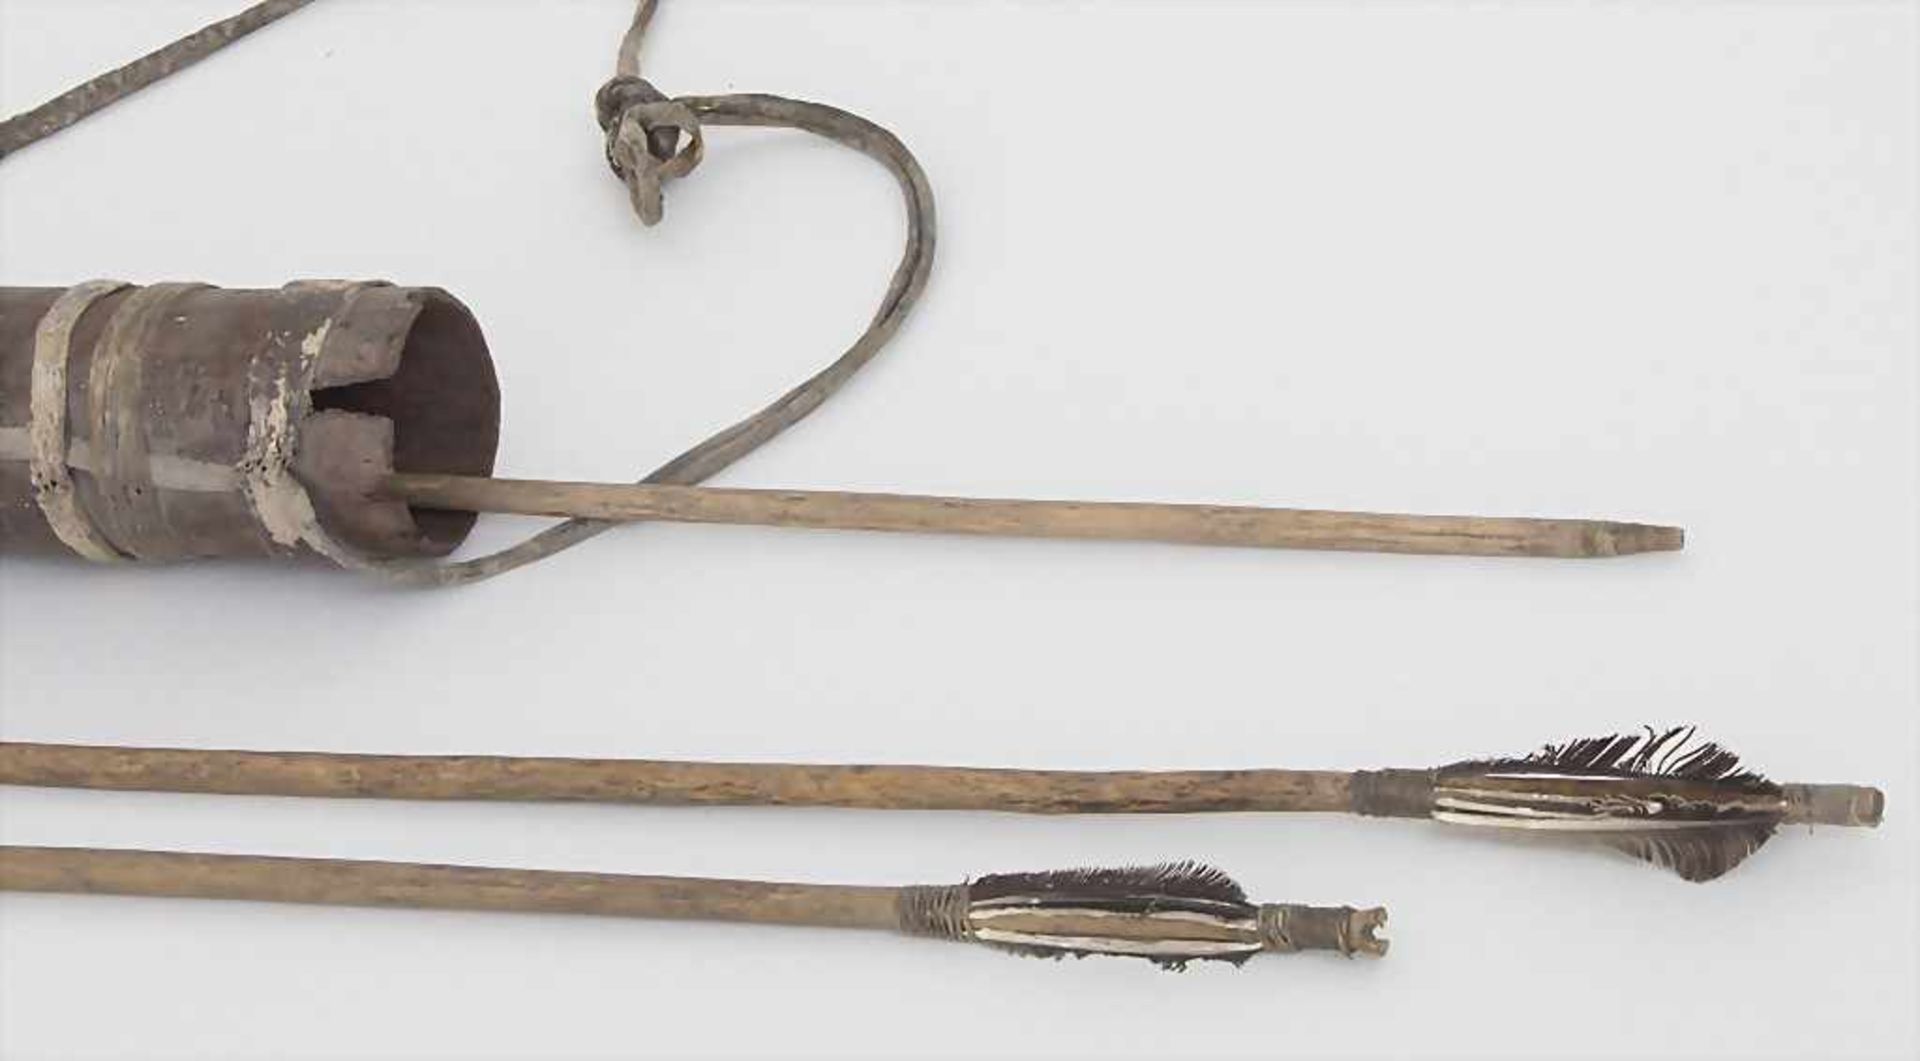 Bogen mit 3 Pfeilen im Köcher / A bow and 3 arrows in quiverMaterial: Holz, Metall, Lederschnüre, - Image 2 of 2